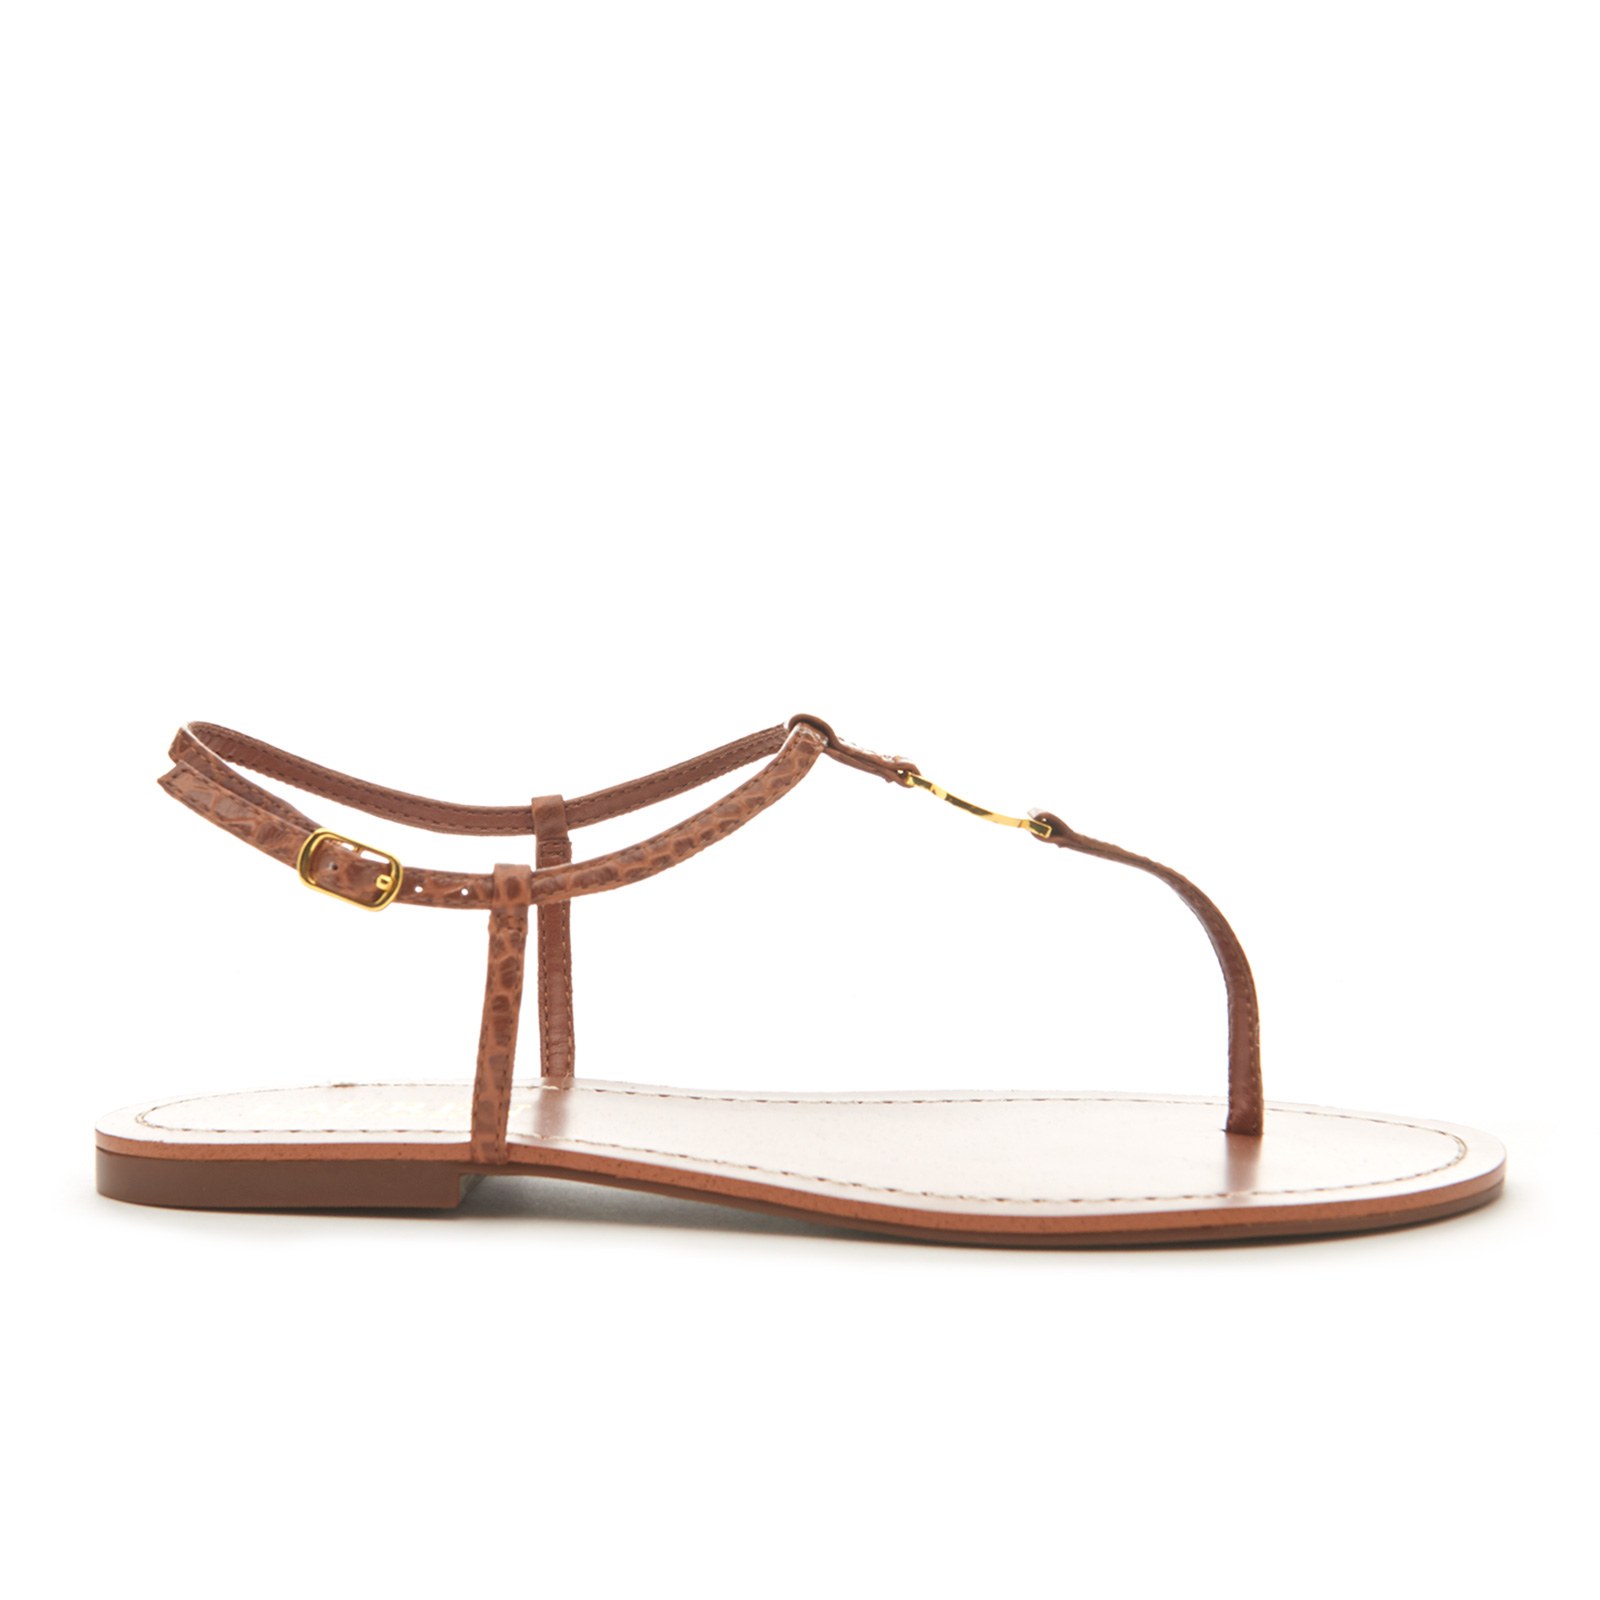 Bar Croc Flat Sandals - Polo Tan 